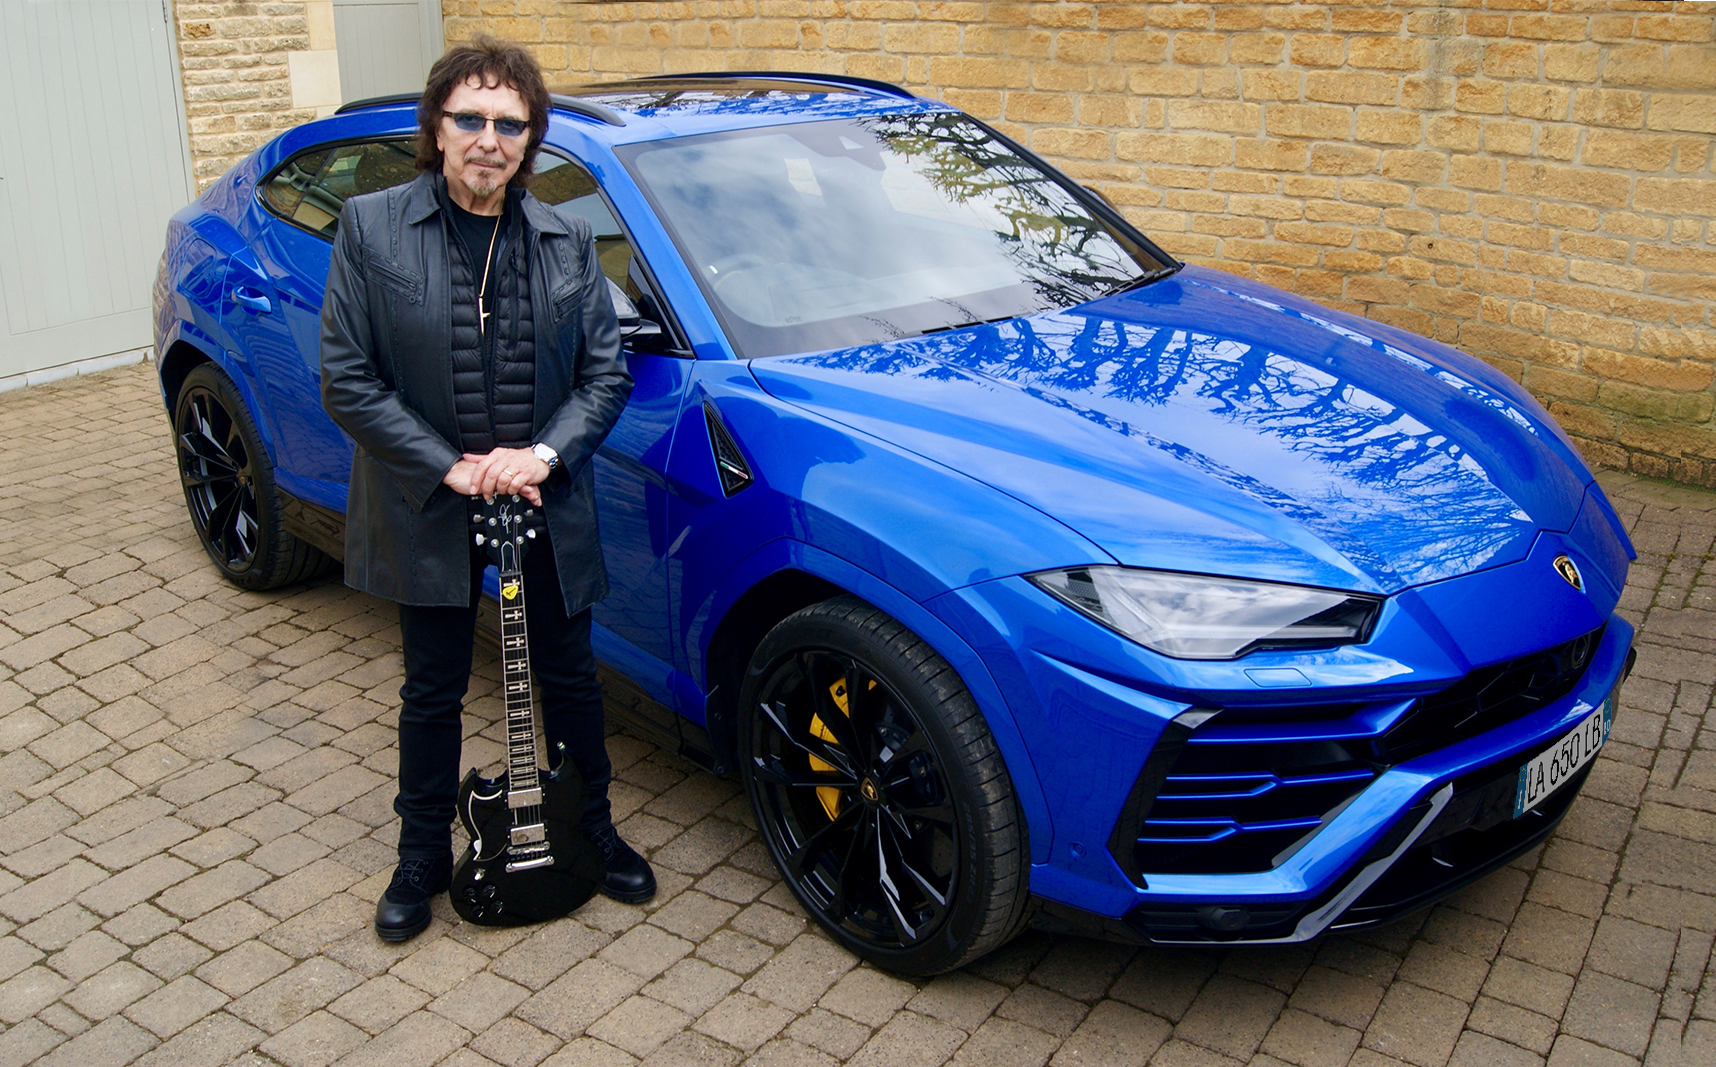 Guitarrista de Black Sabbath presume su nueva Lamborghini Urus